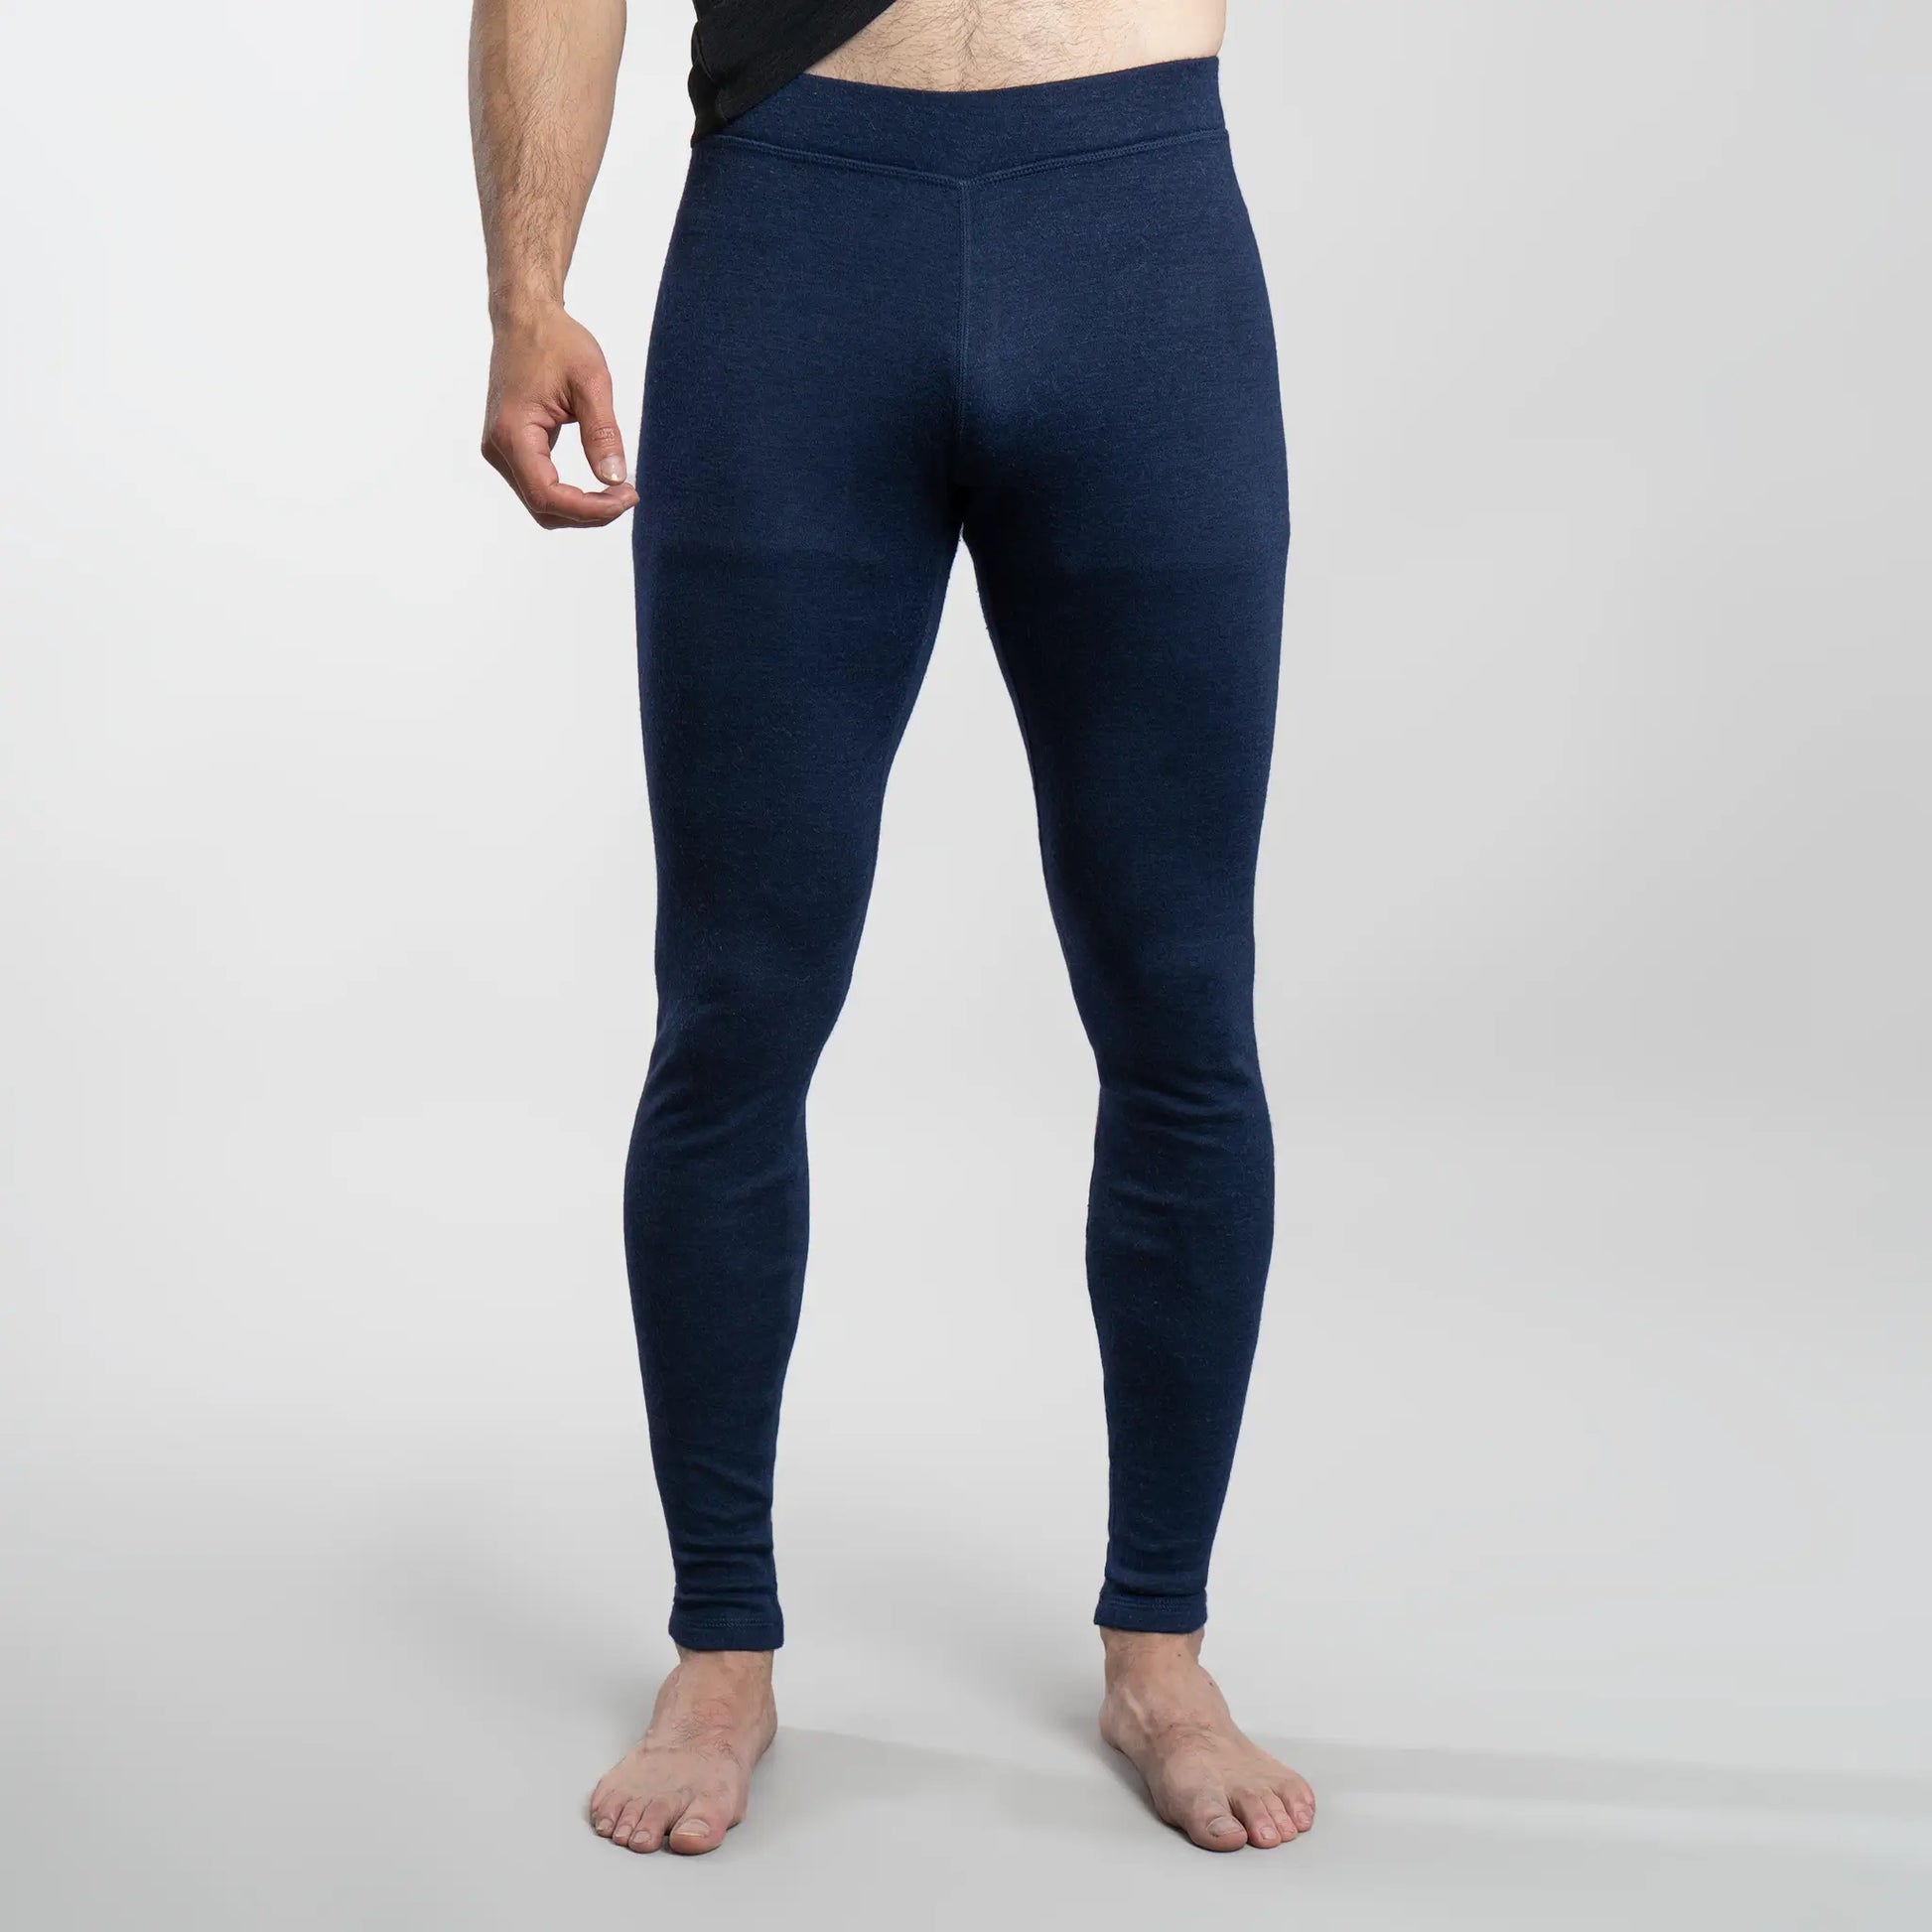 mens best active leggings lightweight color navy blue